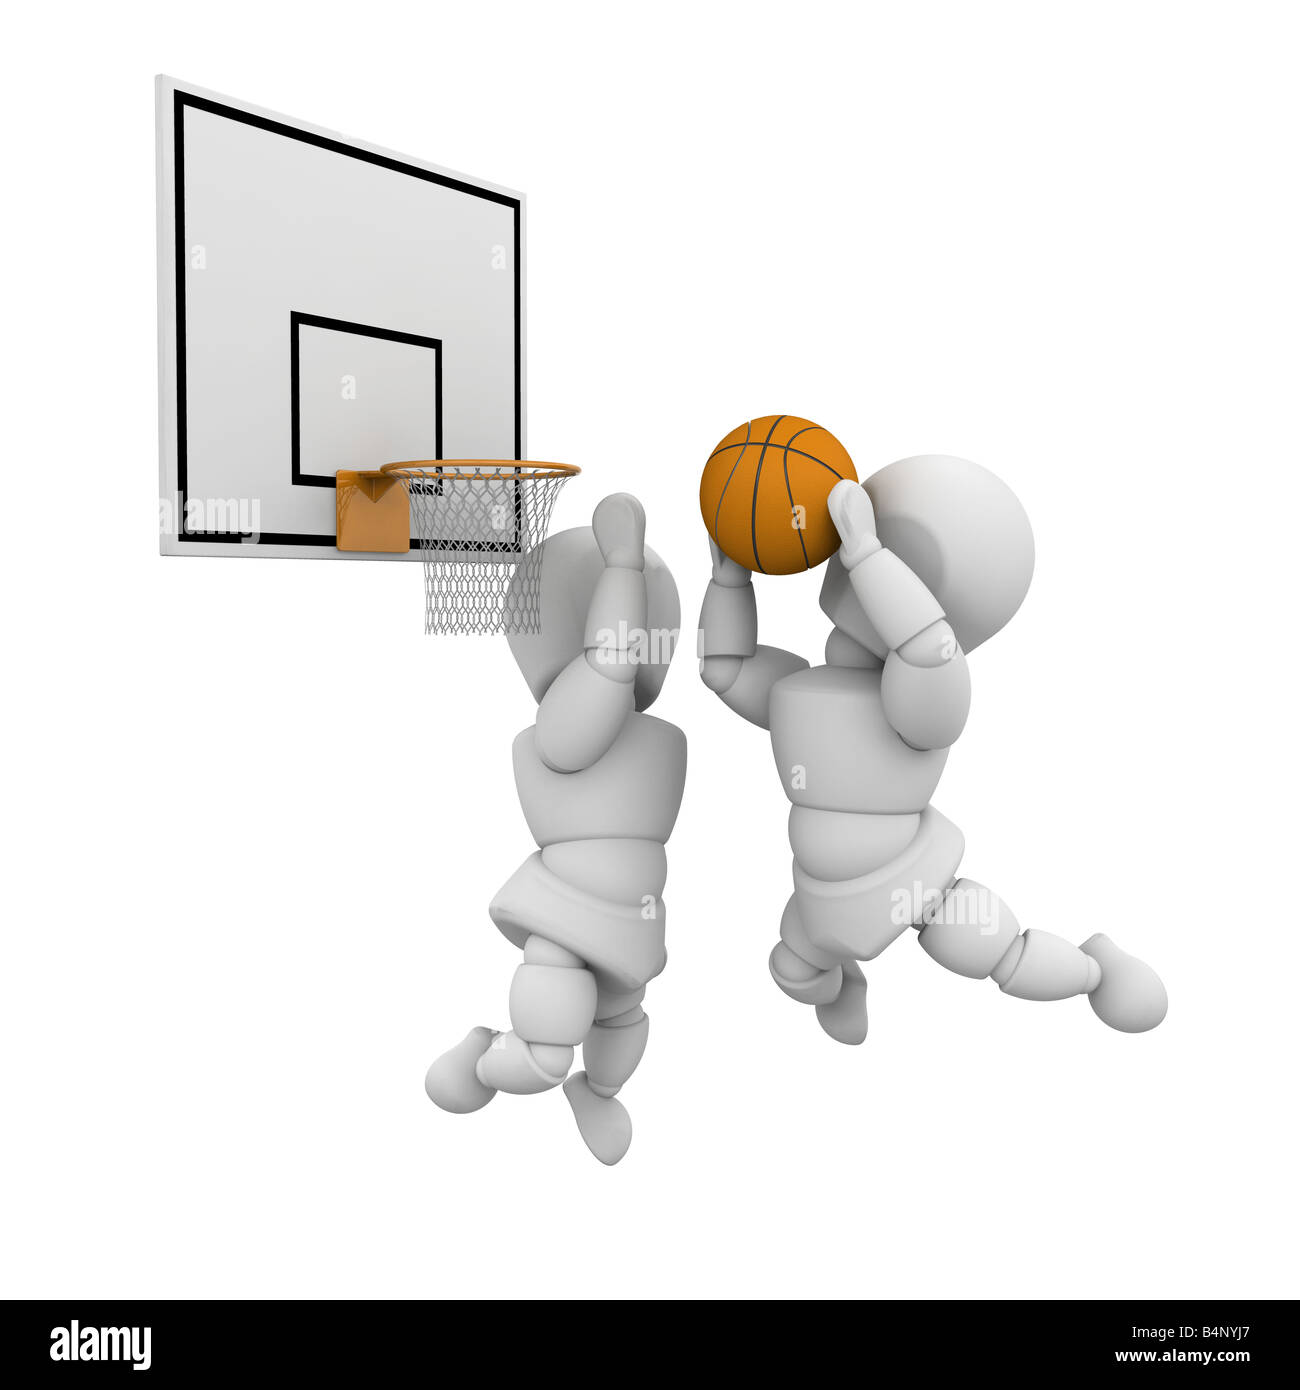 3,031 Golden Basketball Ball Images, Stock Photos, 3D objects